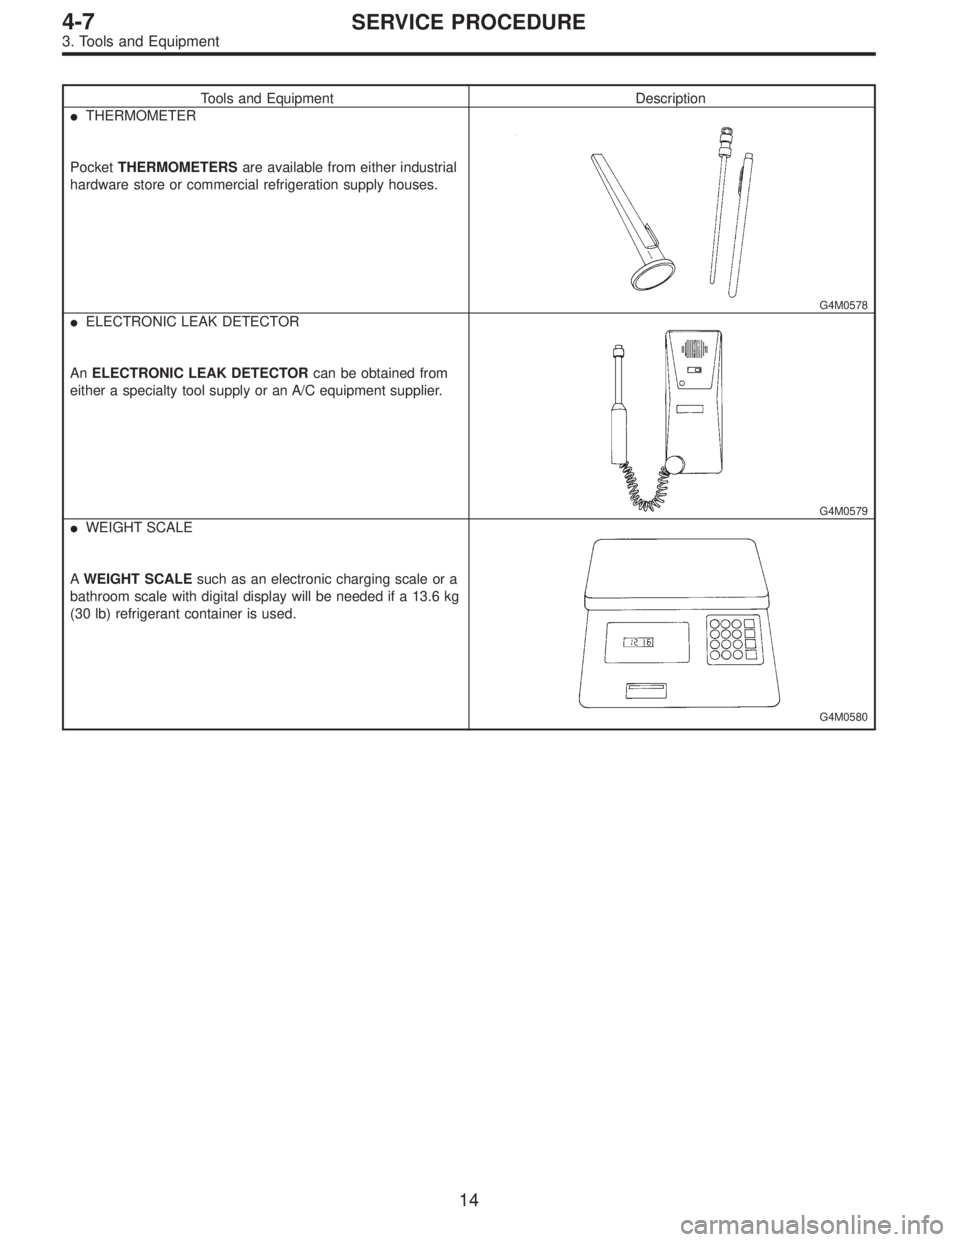 SUBARU LEGACY 1995  Service Repair Manual Tools and Equipment Description
THERMOMETER
PocketTHERMOMETERSare available from either industrial
hardware store or commercial refrigeration supply houses.
G4M0578
ELECTRONIC LEAK DETECTOR
AnELECTR